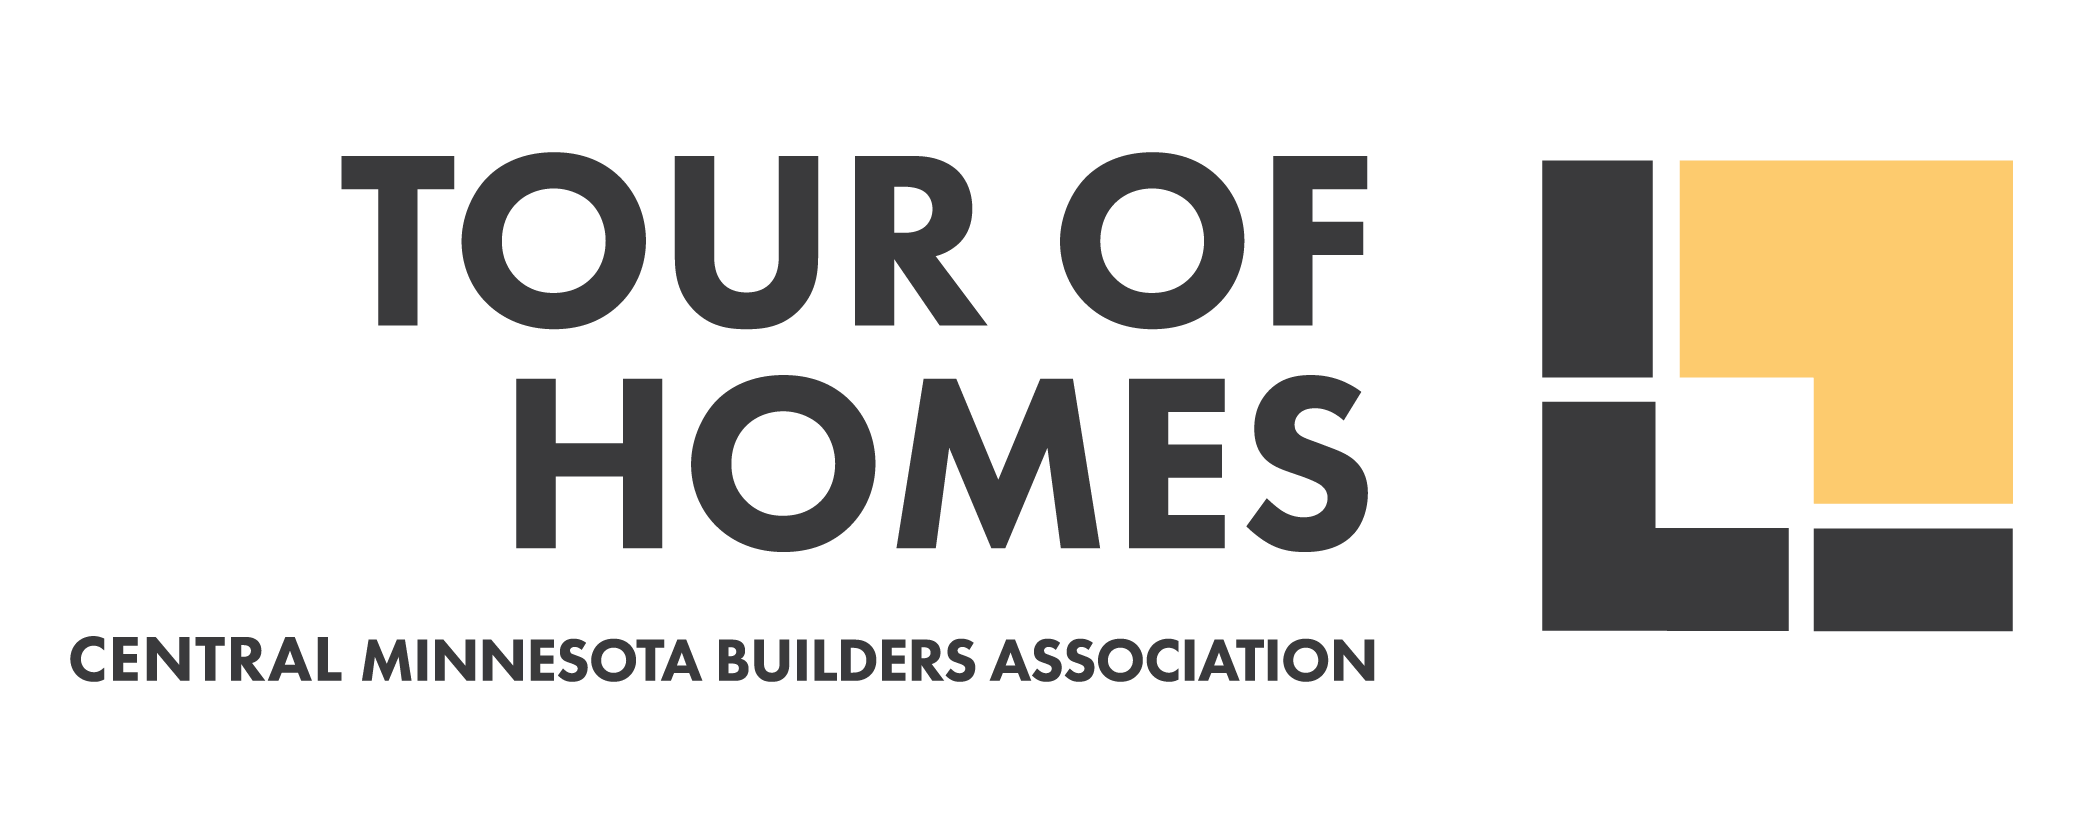 CMBA Tour of Homes Logo-01